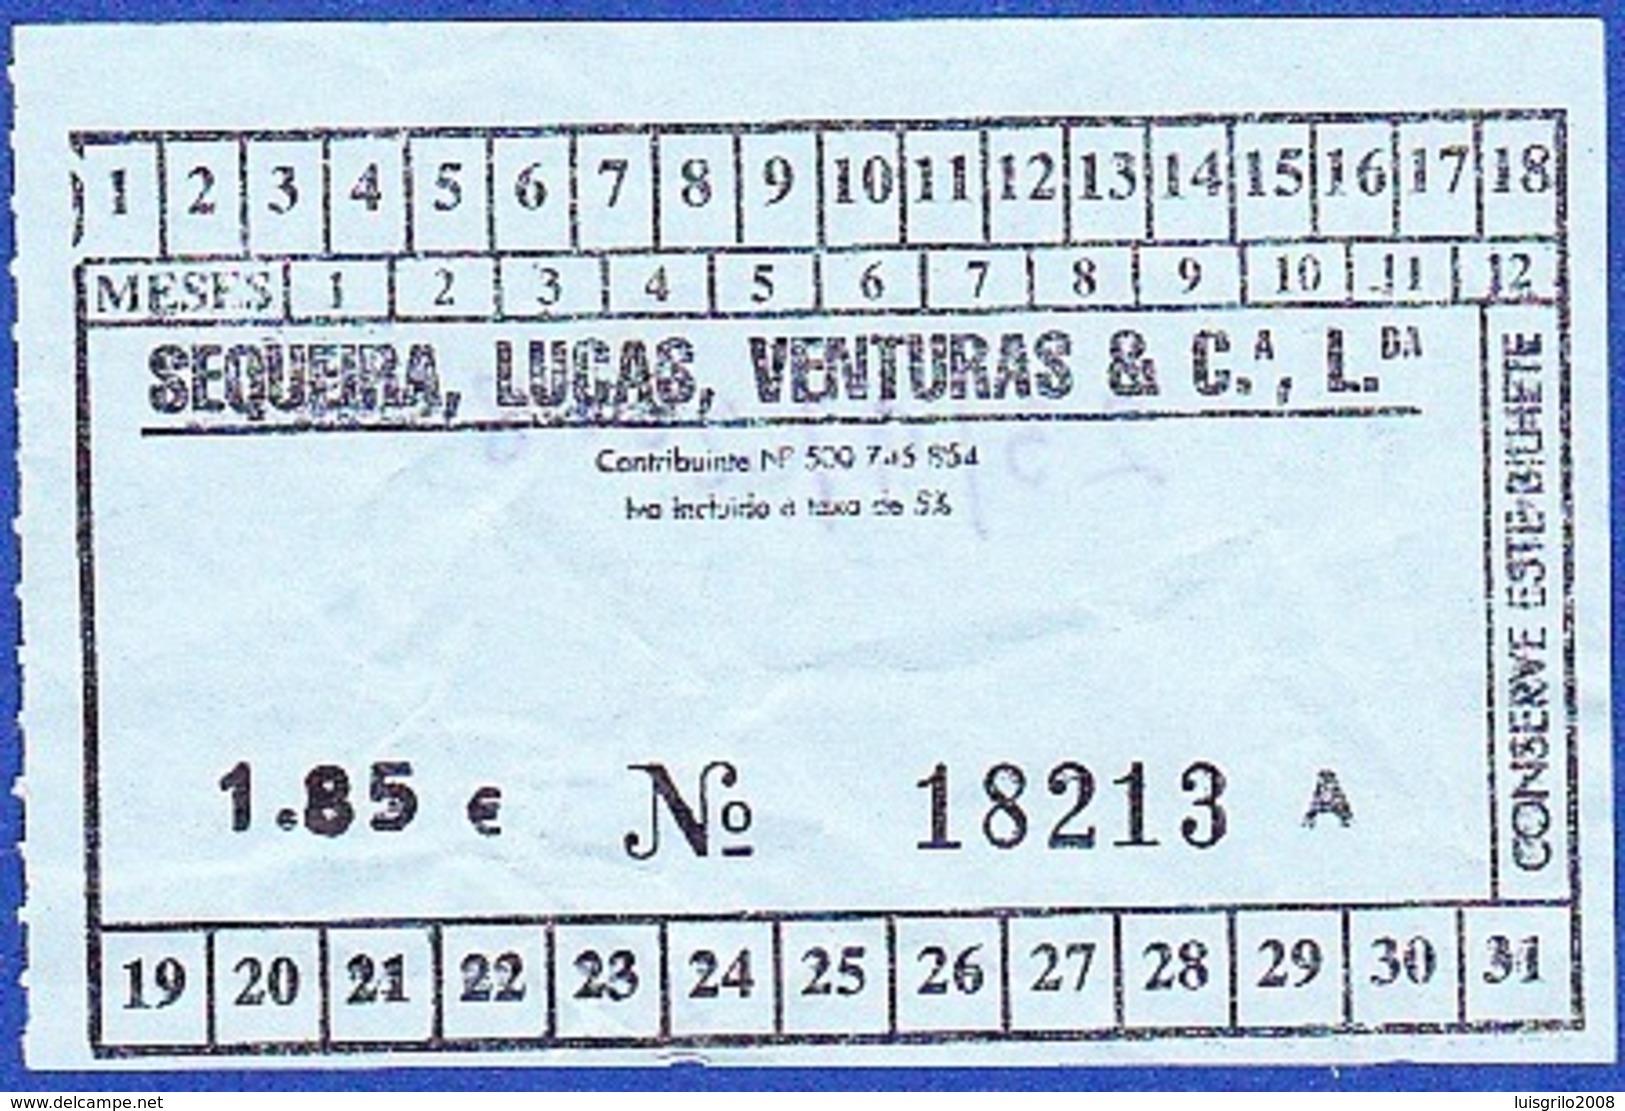 Bus Ticket, Portugal 2008 - Transportes Sequeira, Lucas, Venturas & Cª. / Porto - Europa